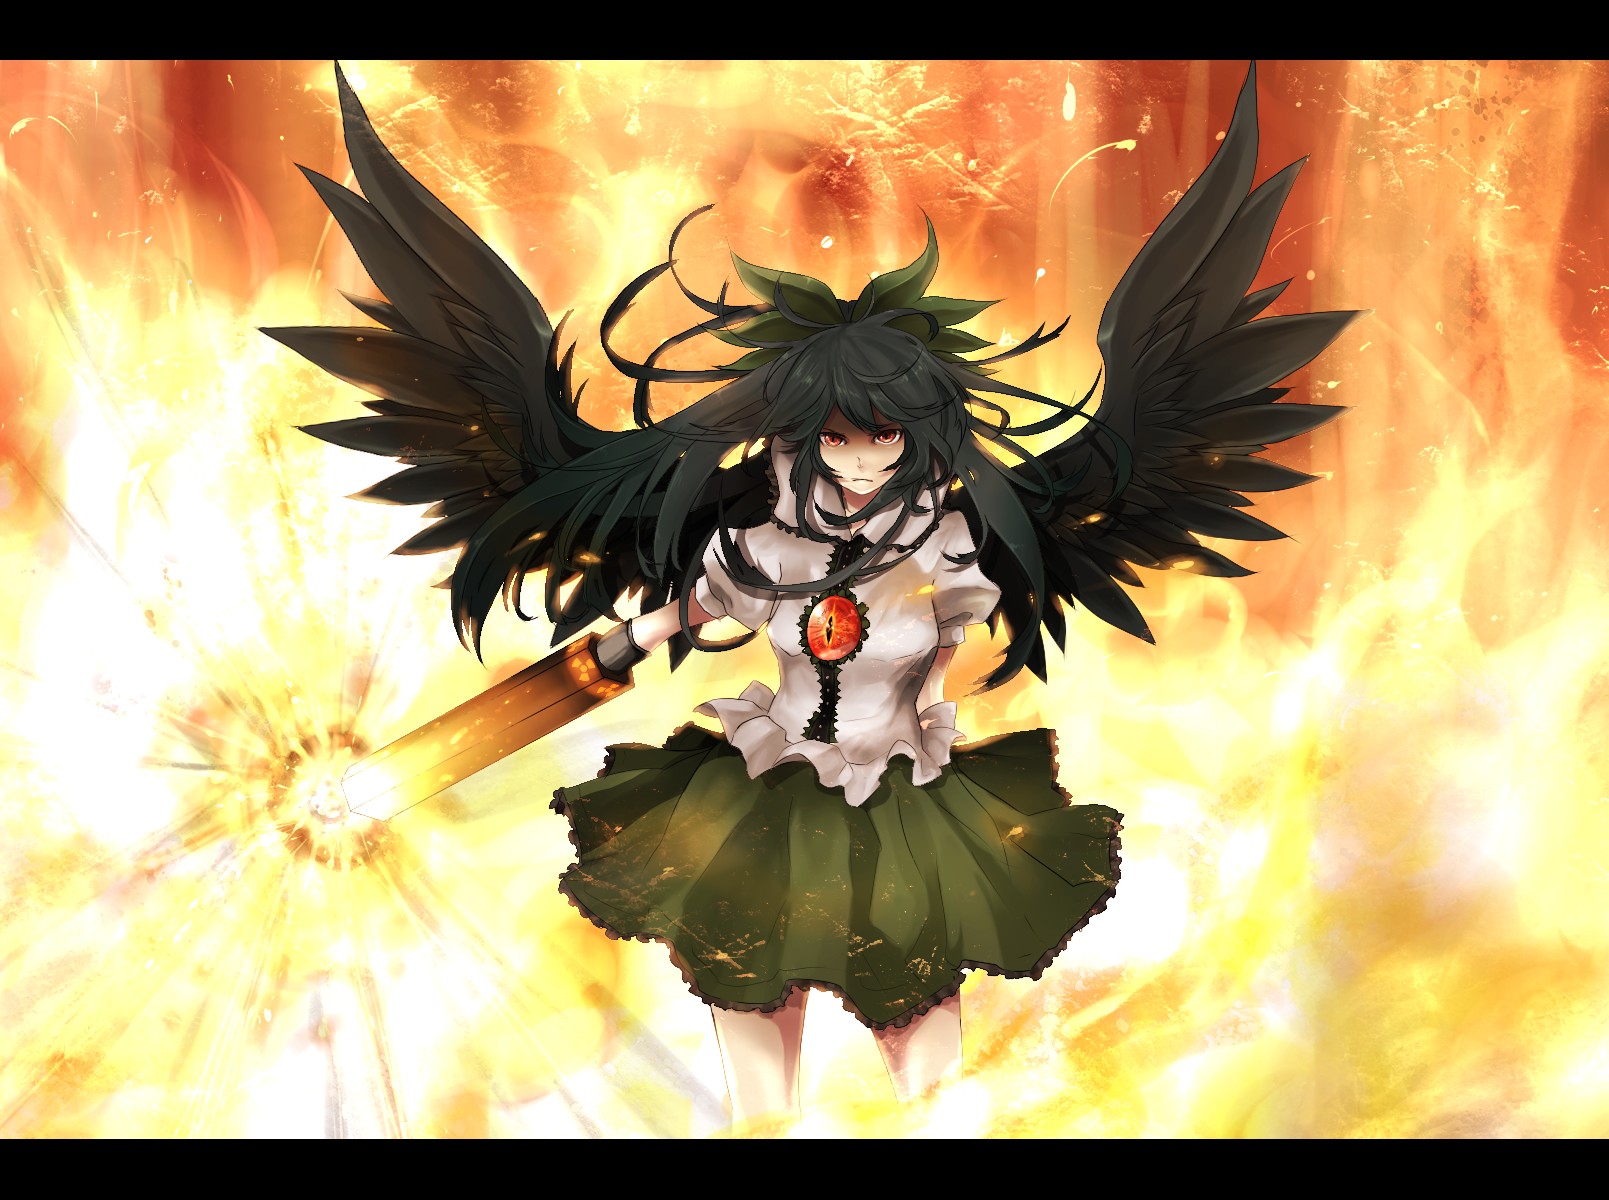 Touhou, Reiuji Utsuho, Green, Skirt, Red eyes, Wings, Nuclear, Flares, Fire, Neota Wallpaper